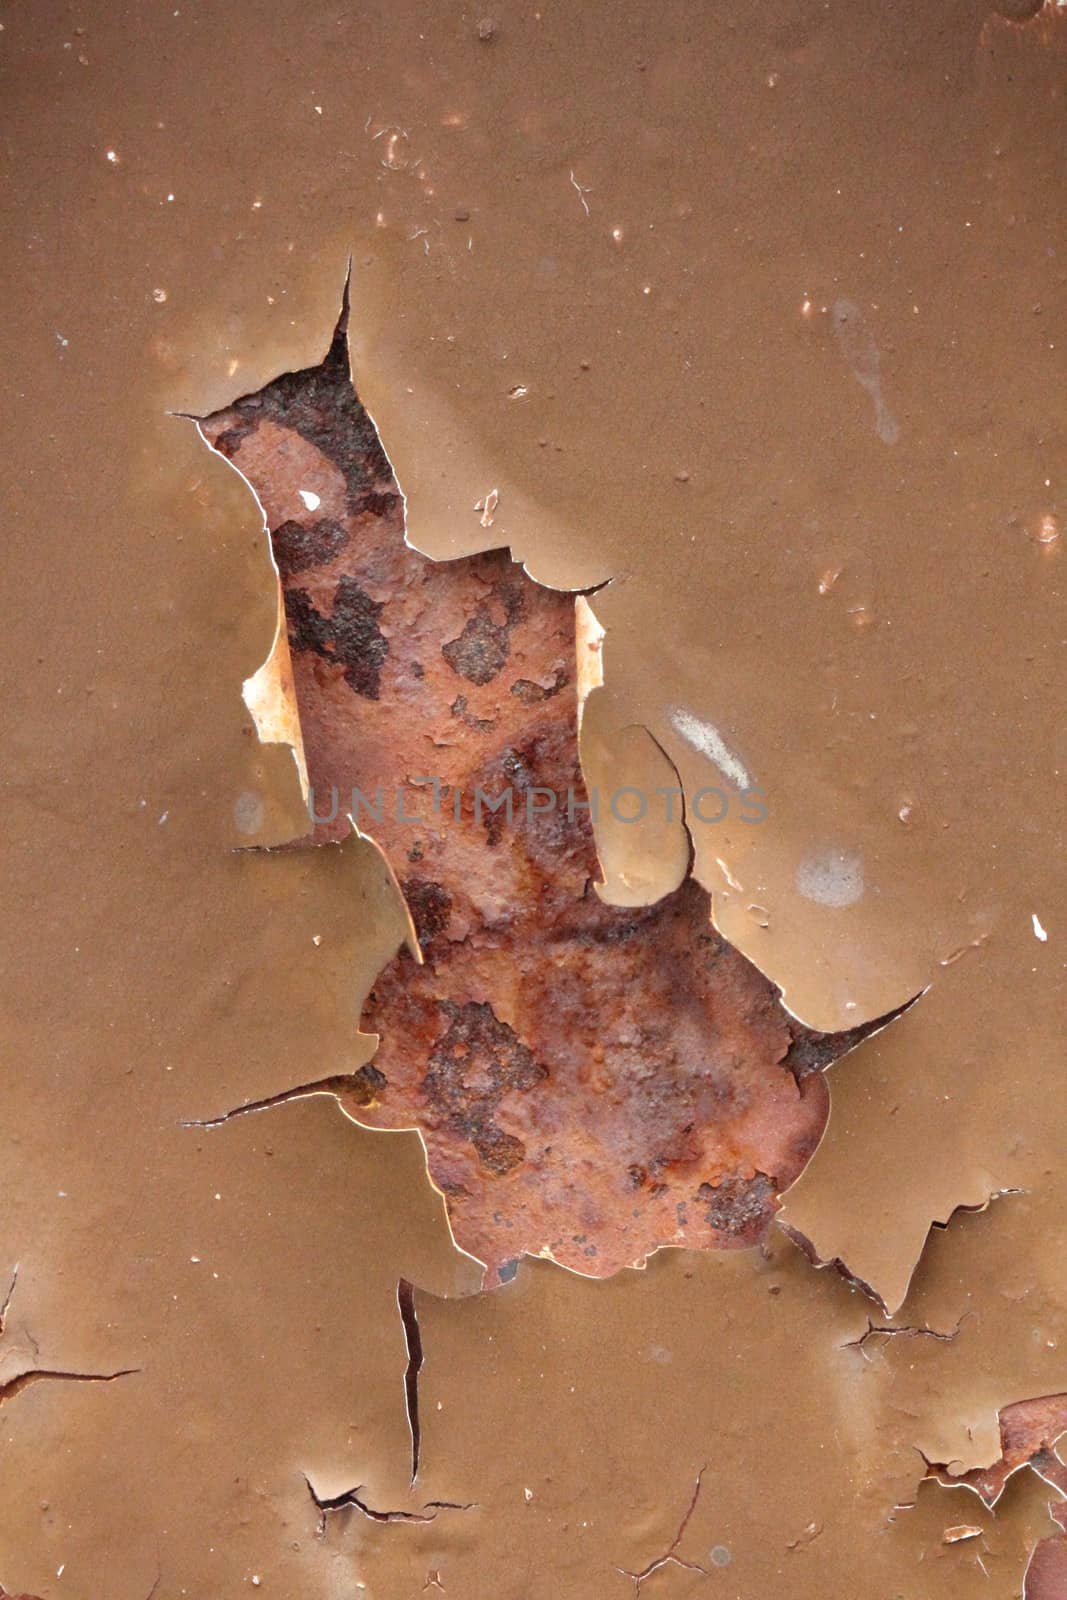 Rusty metal surface or grunge texture of teared metal sheet